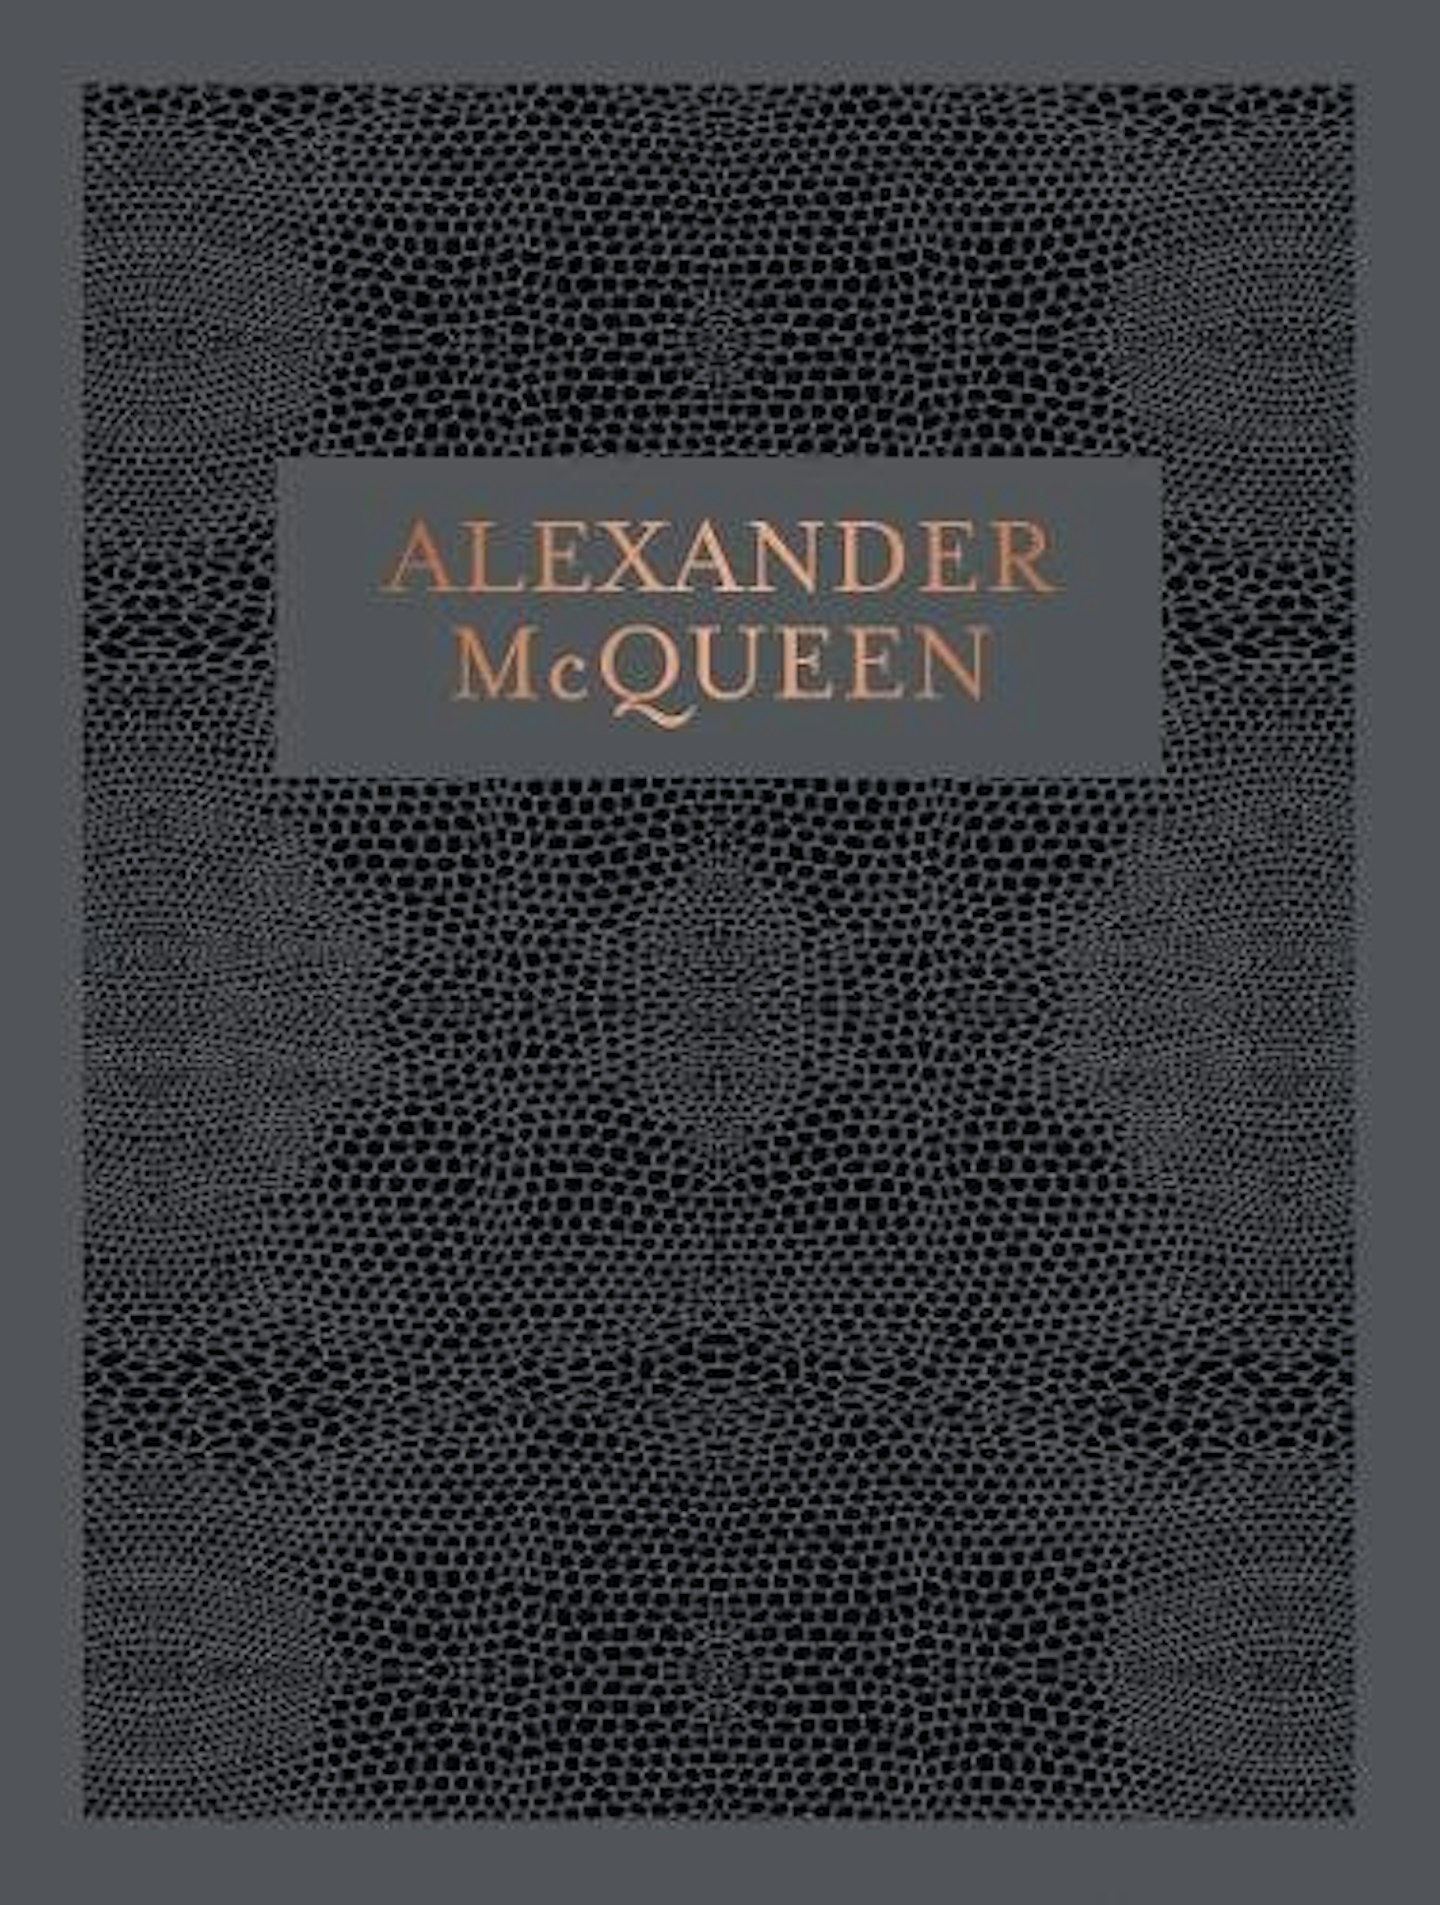 Alexander McQueen by Claire Wilcox, £28.99